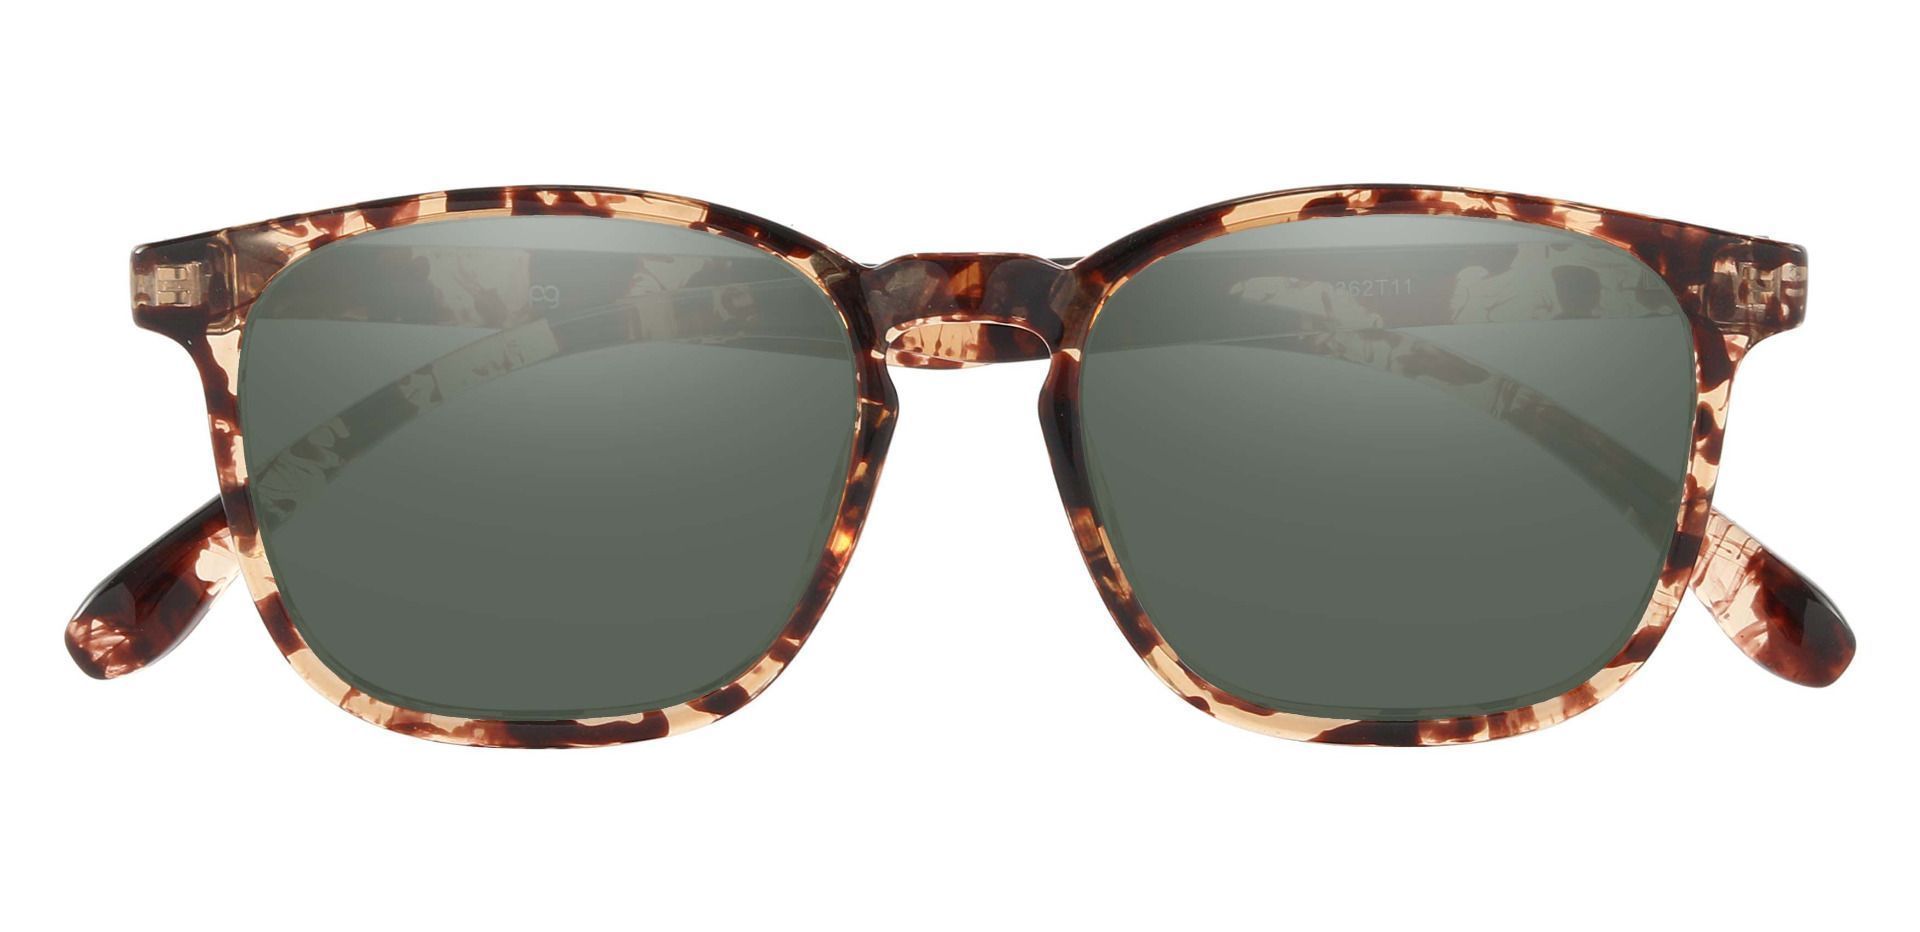 Gateway Square Reading Sunglasses - Tortoise Frame With Green Lenses